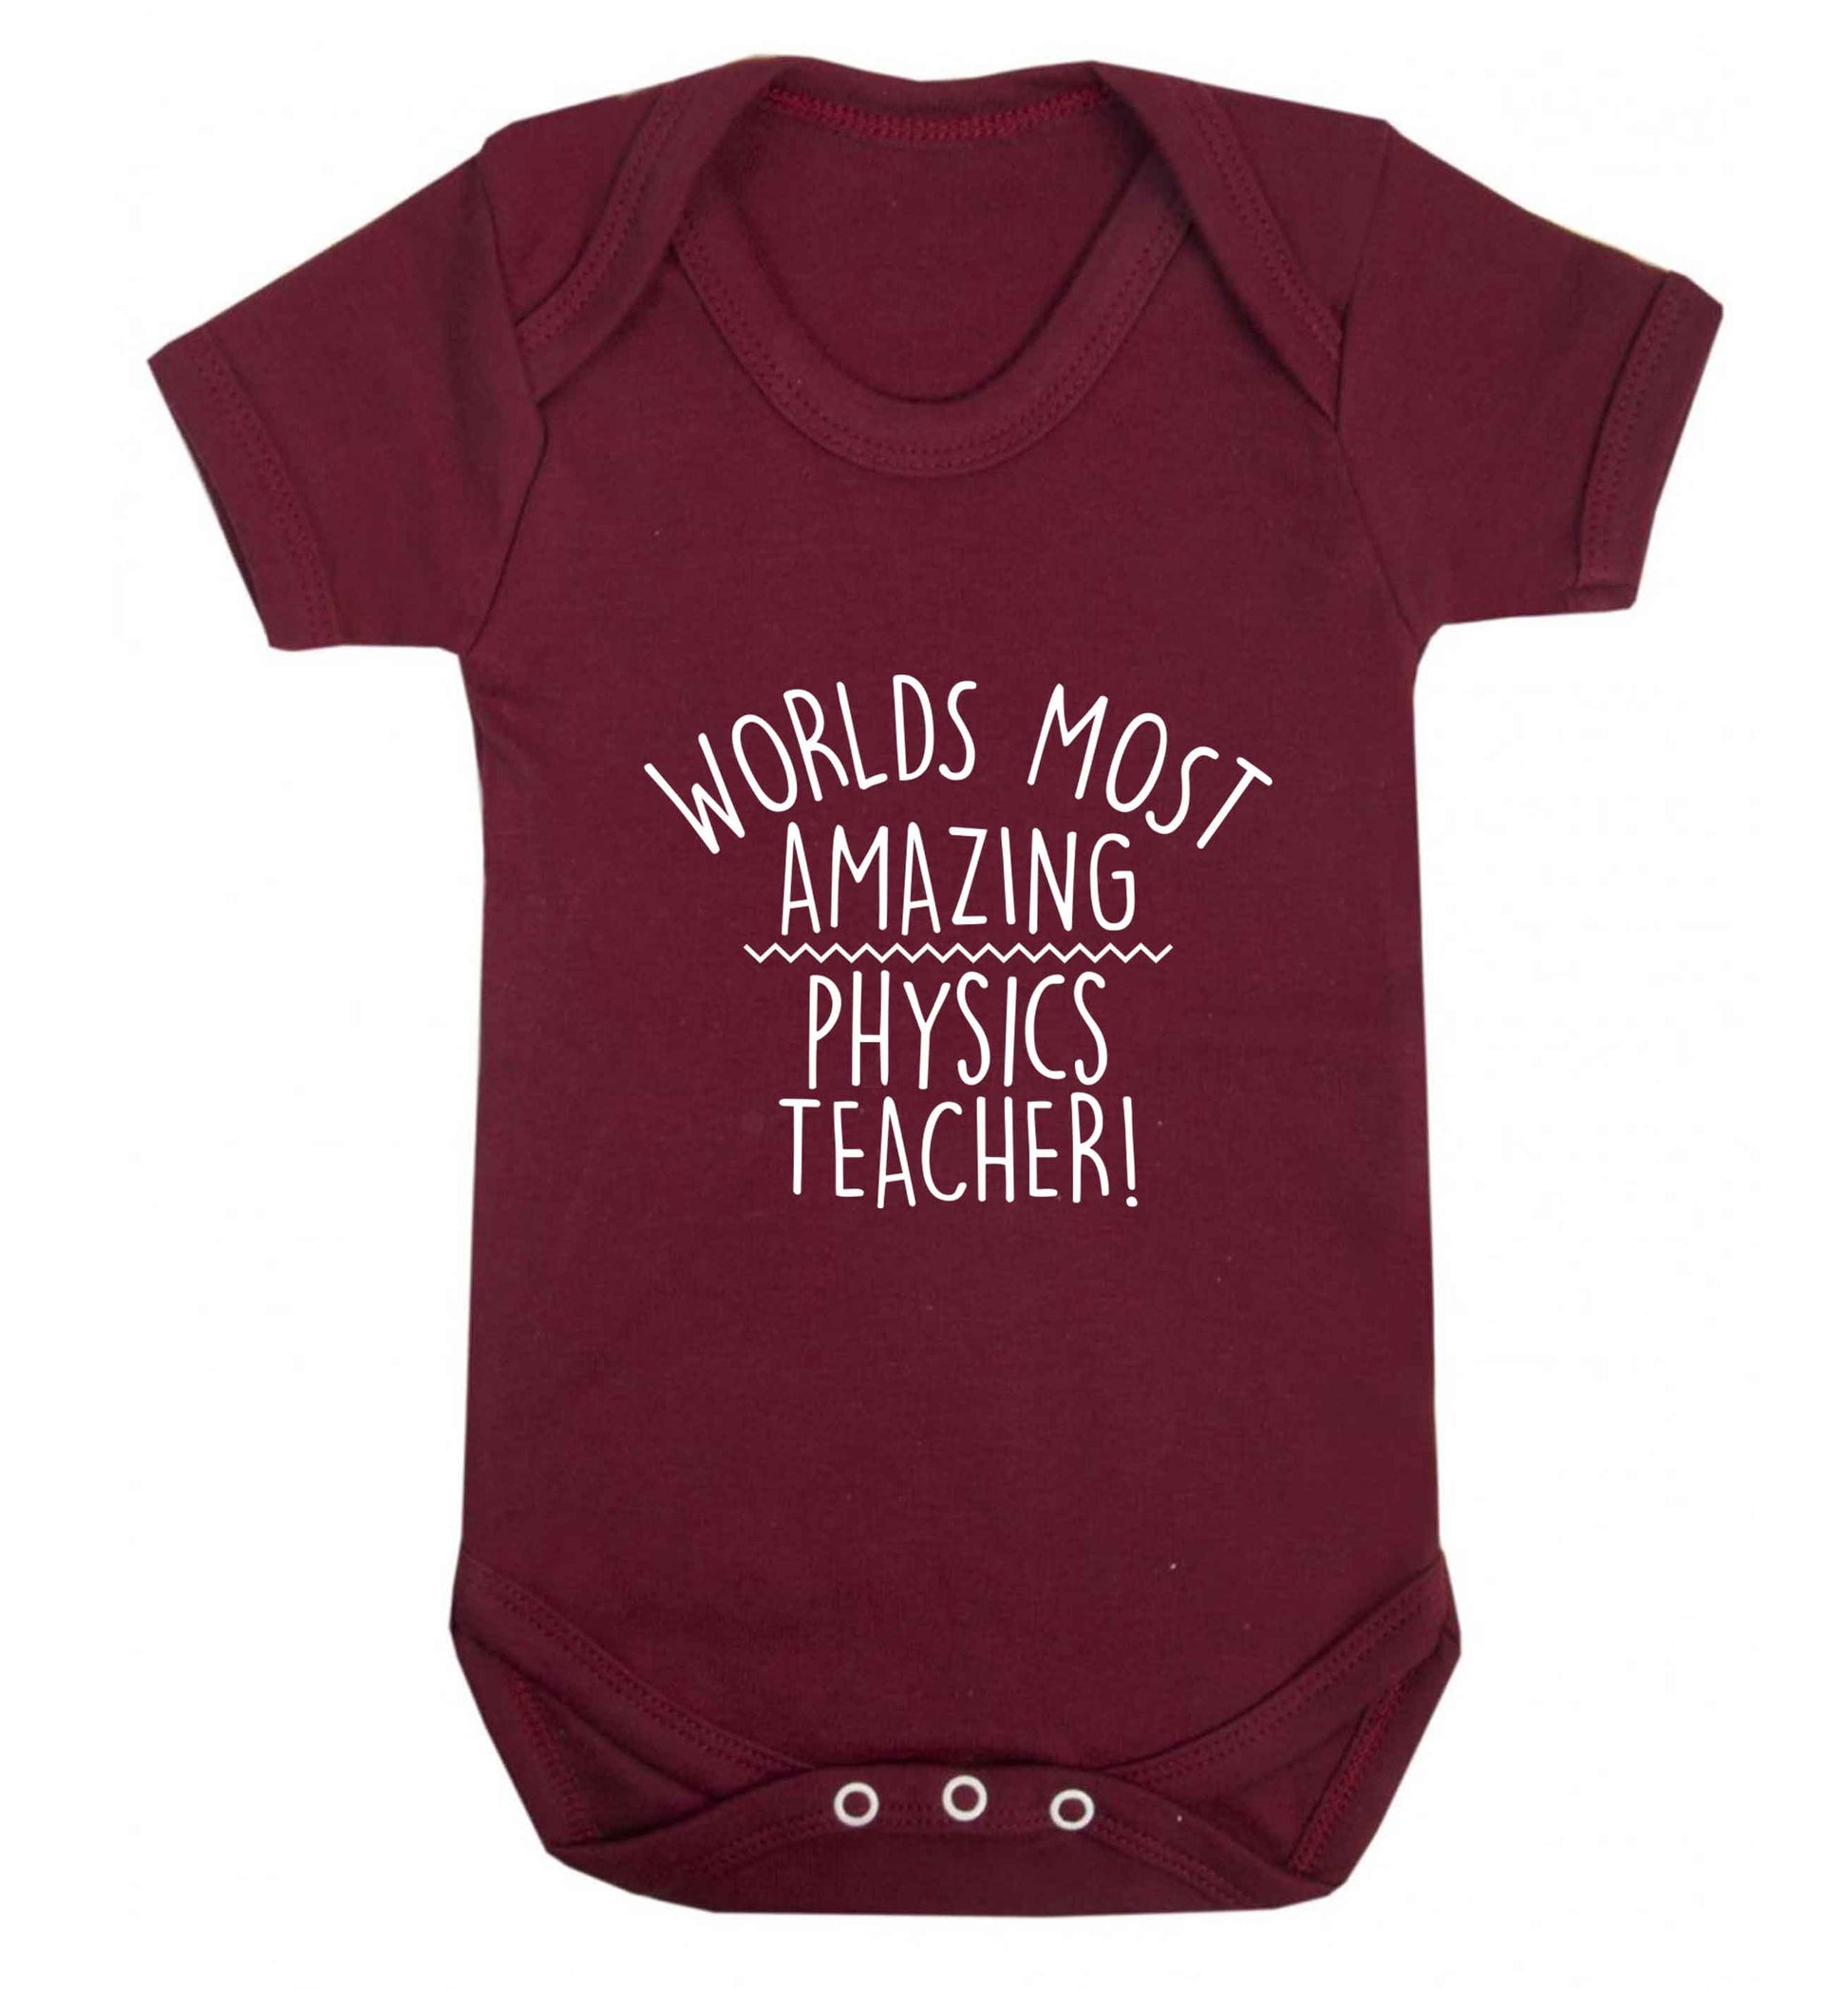 Worlds most amazing physics teacher baby vest maroon 18-24 months